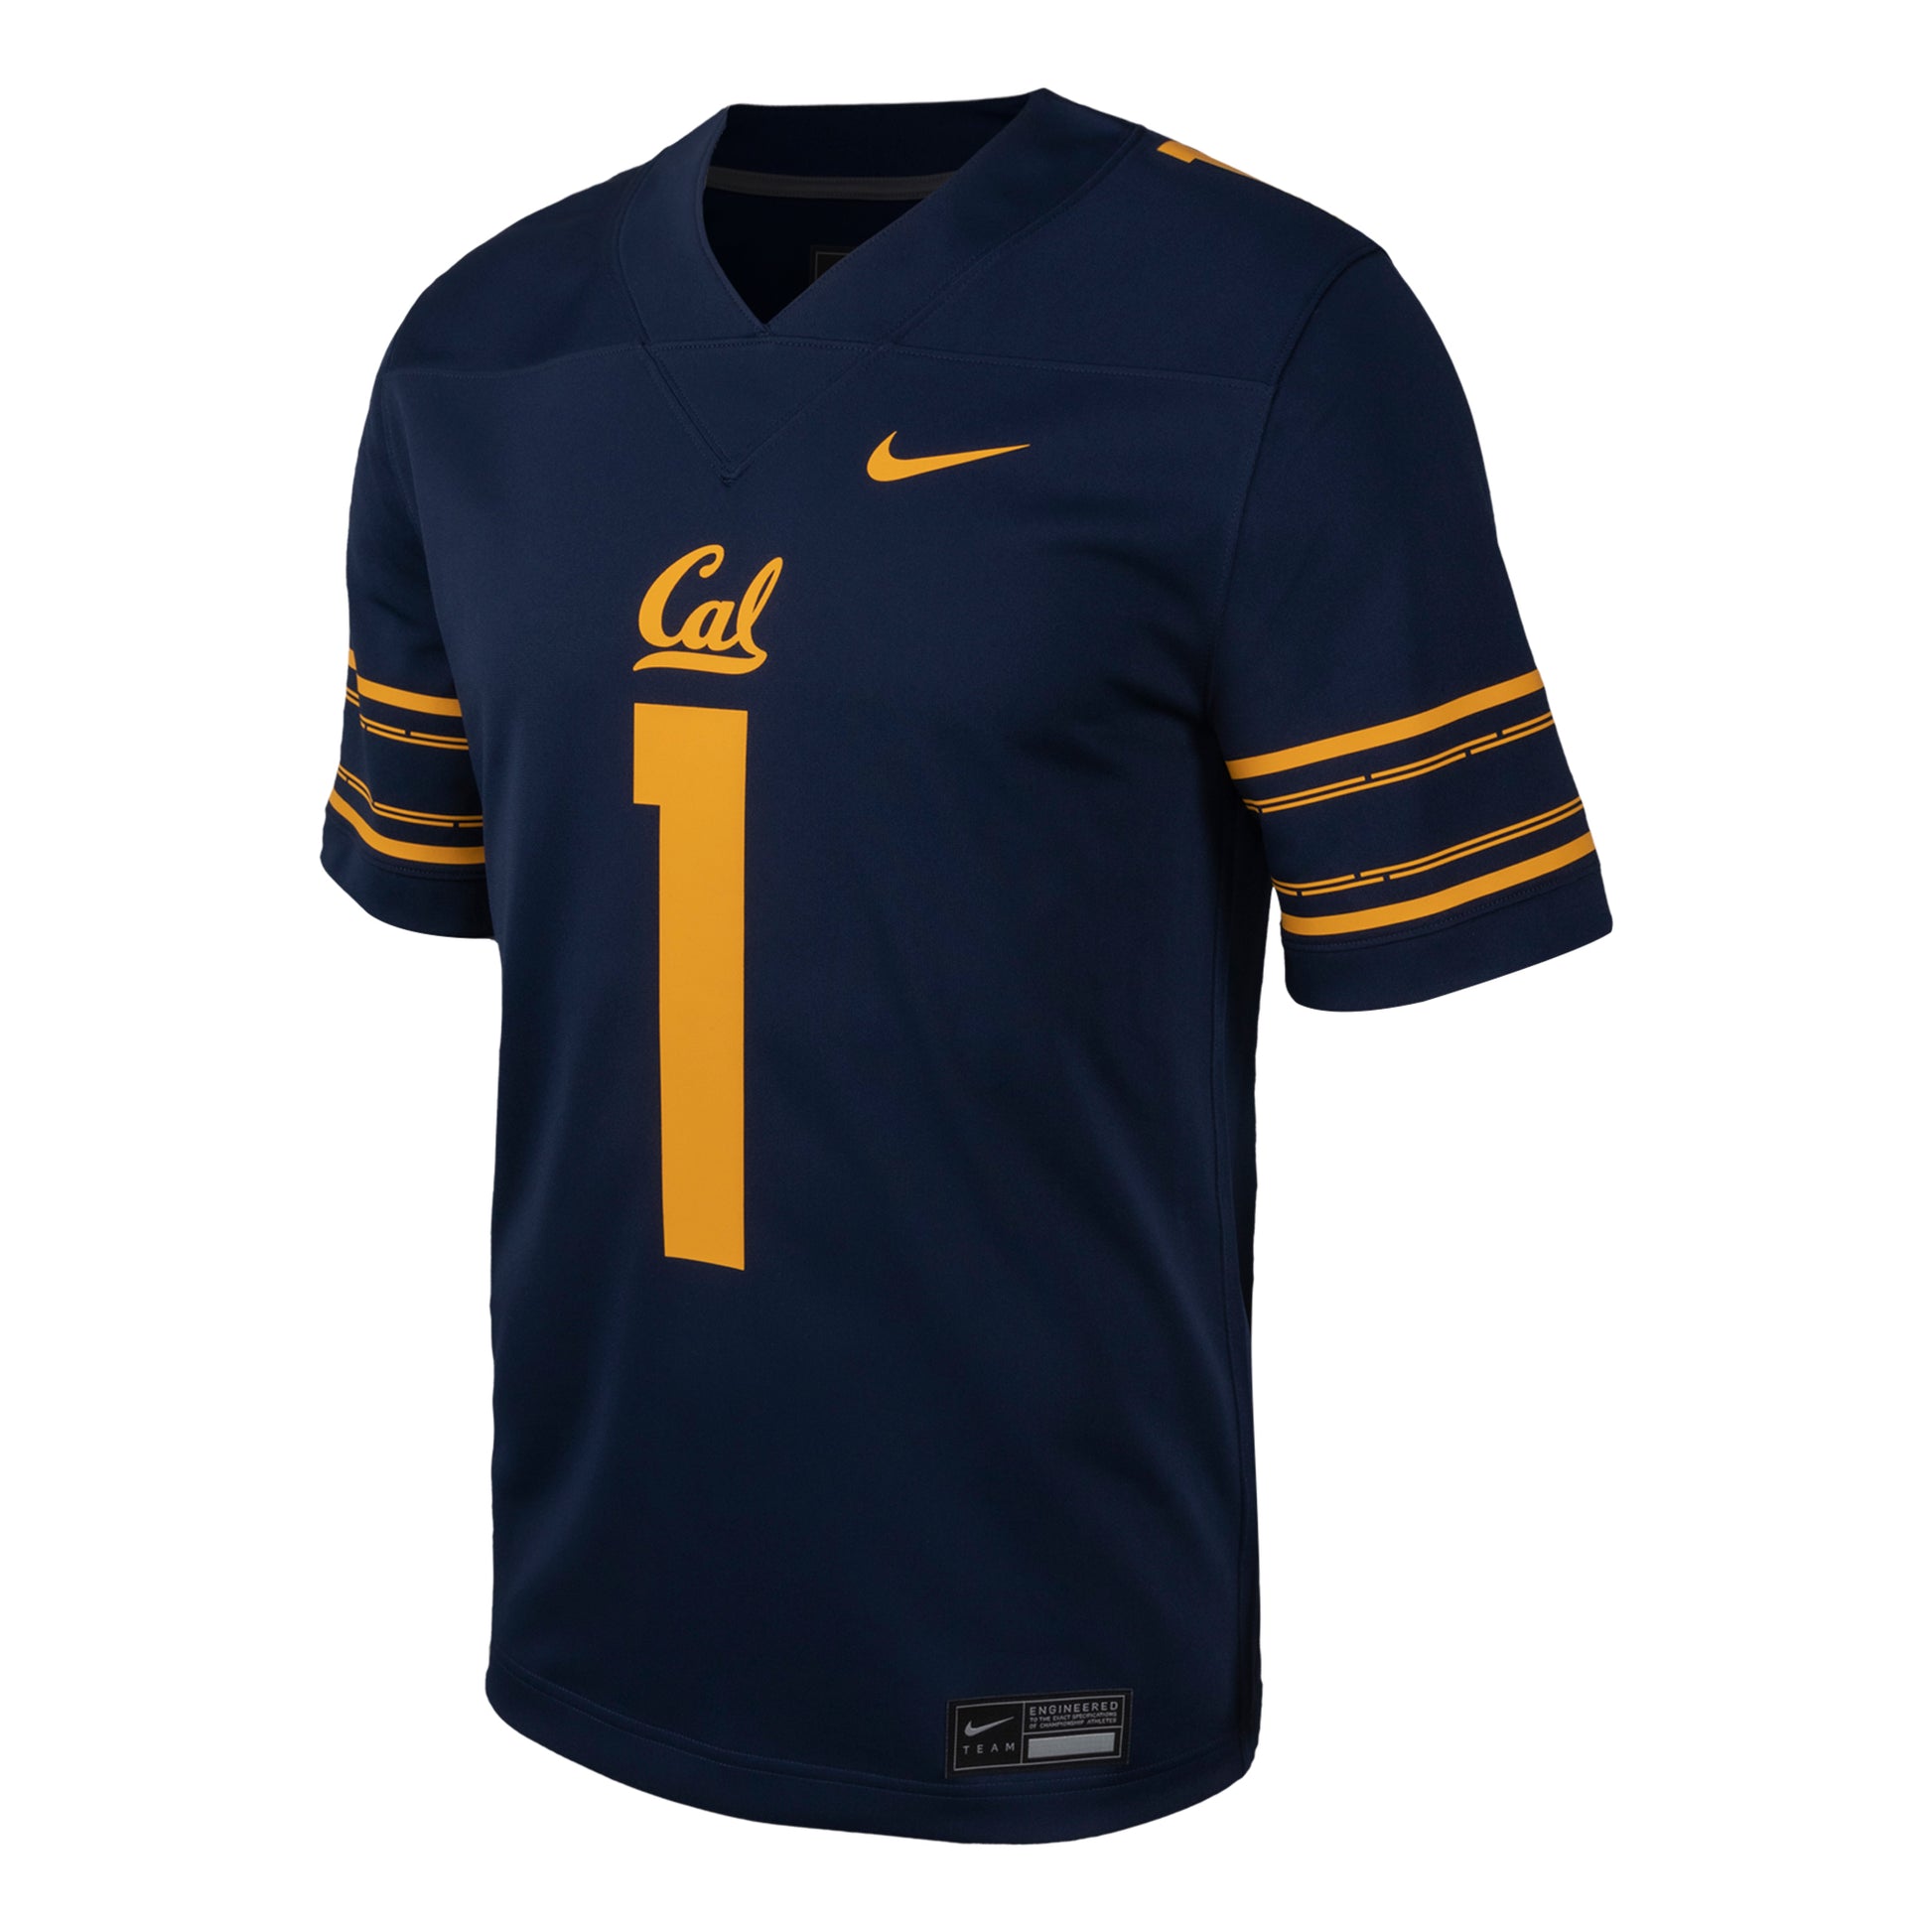 Men's Nike #1 Navy Cal Bears Untouchable Football Replica Jersey Size: Small